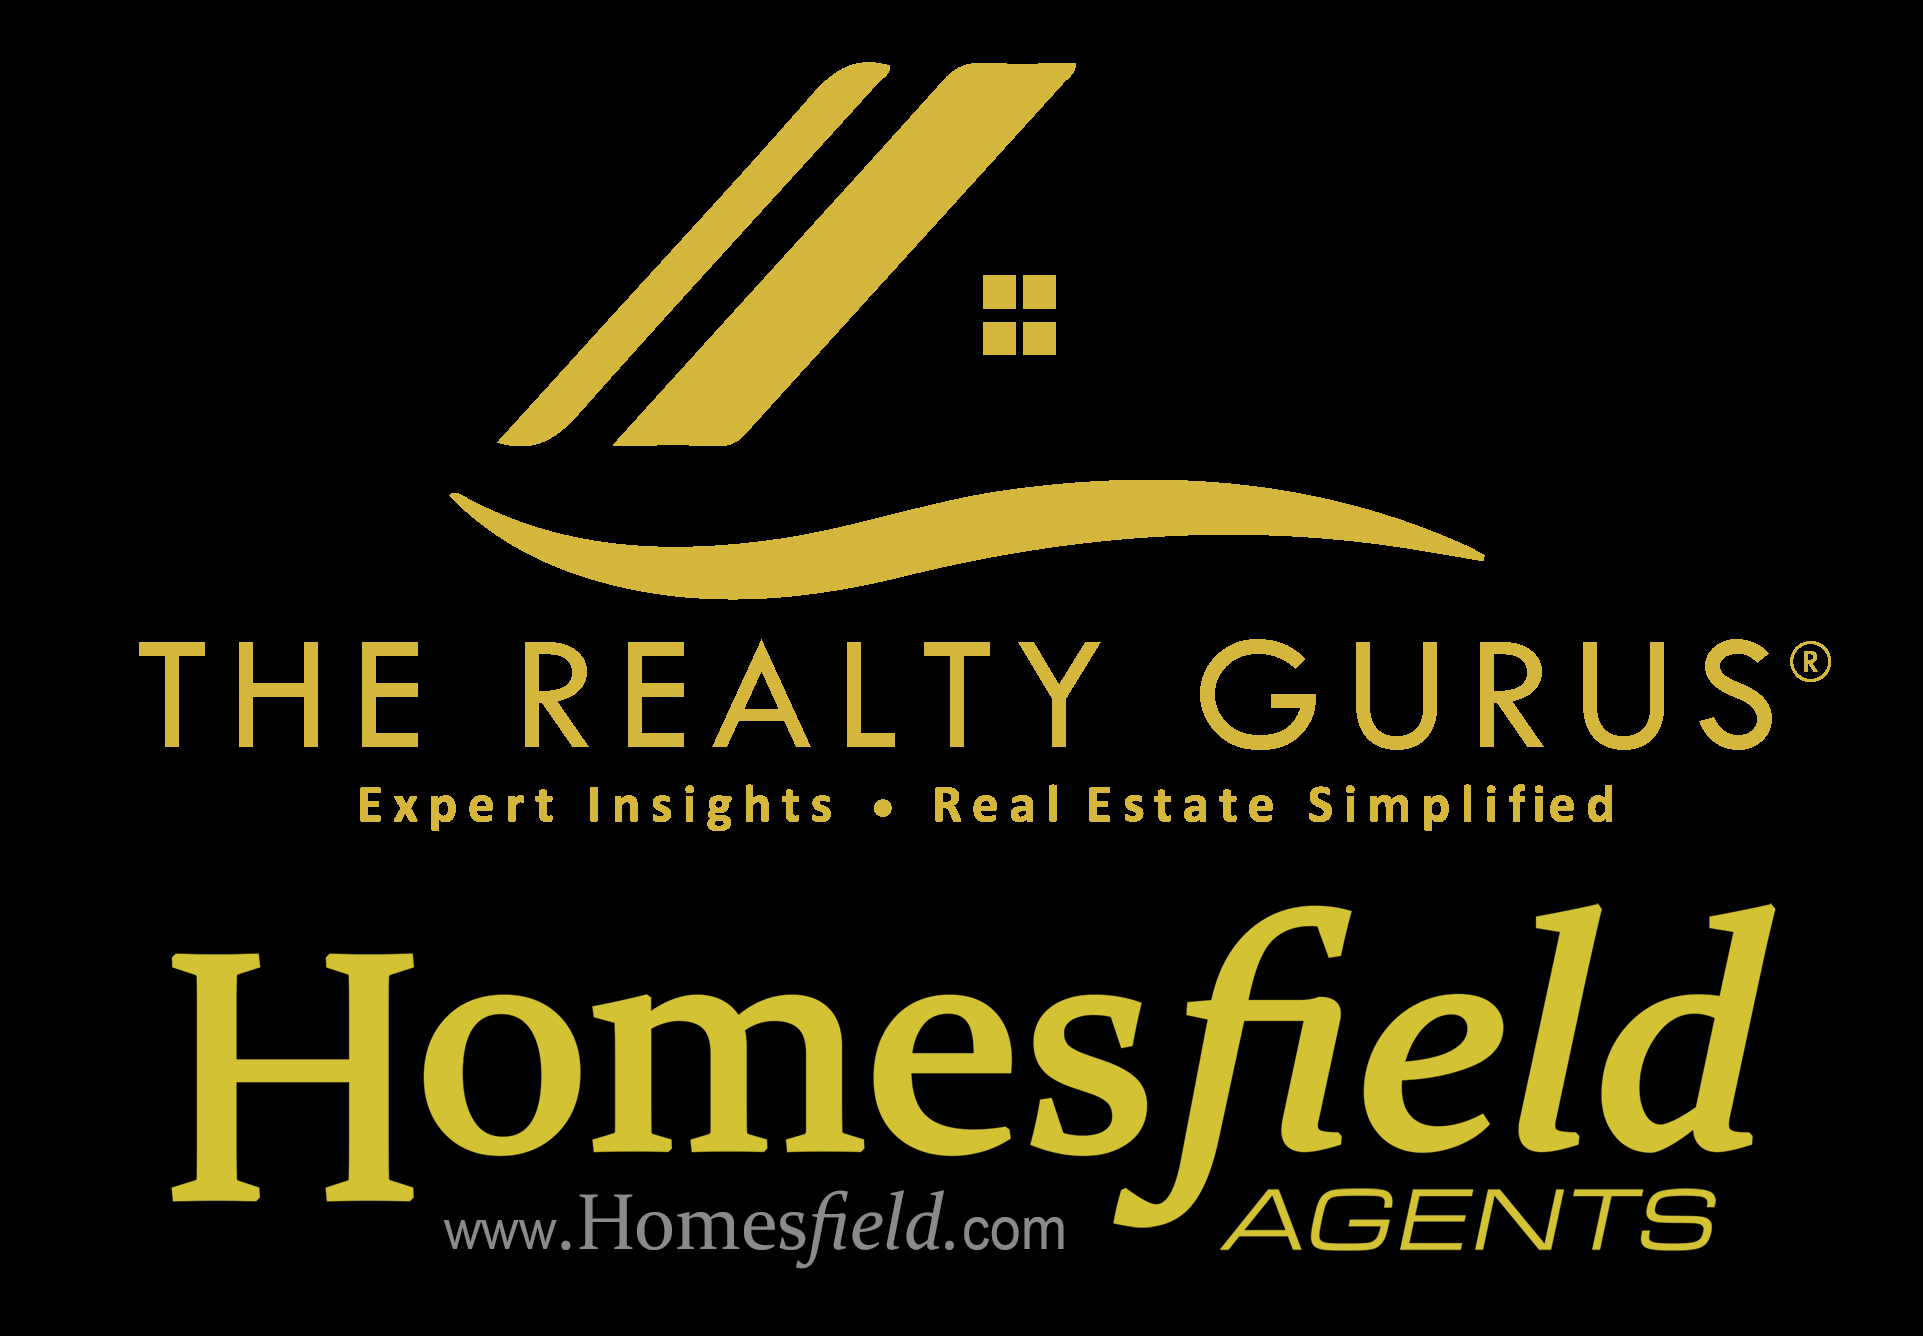 Homesfield Agents at The Realty Gurus